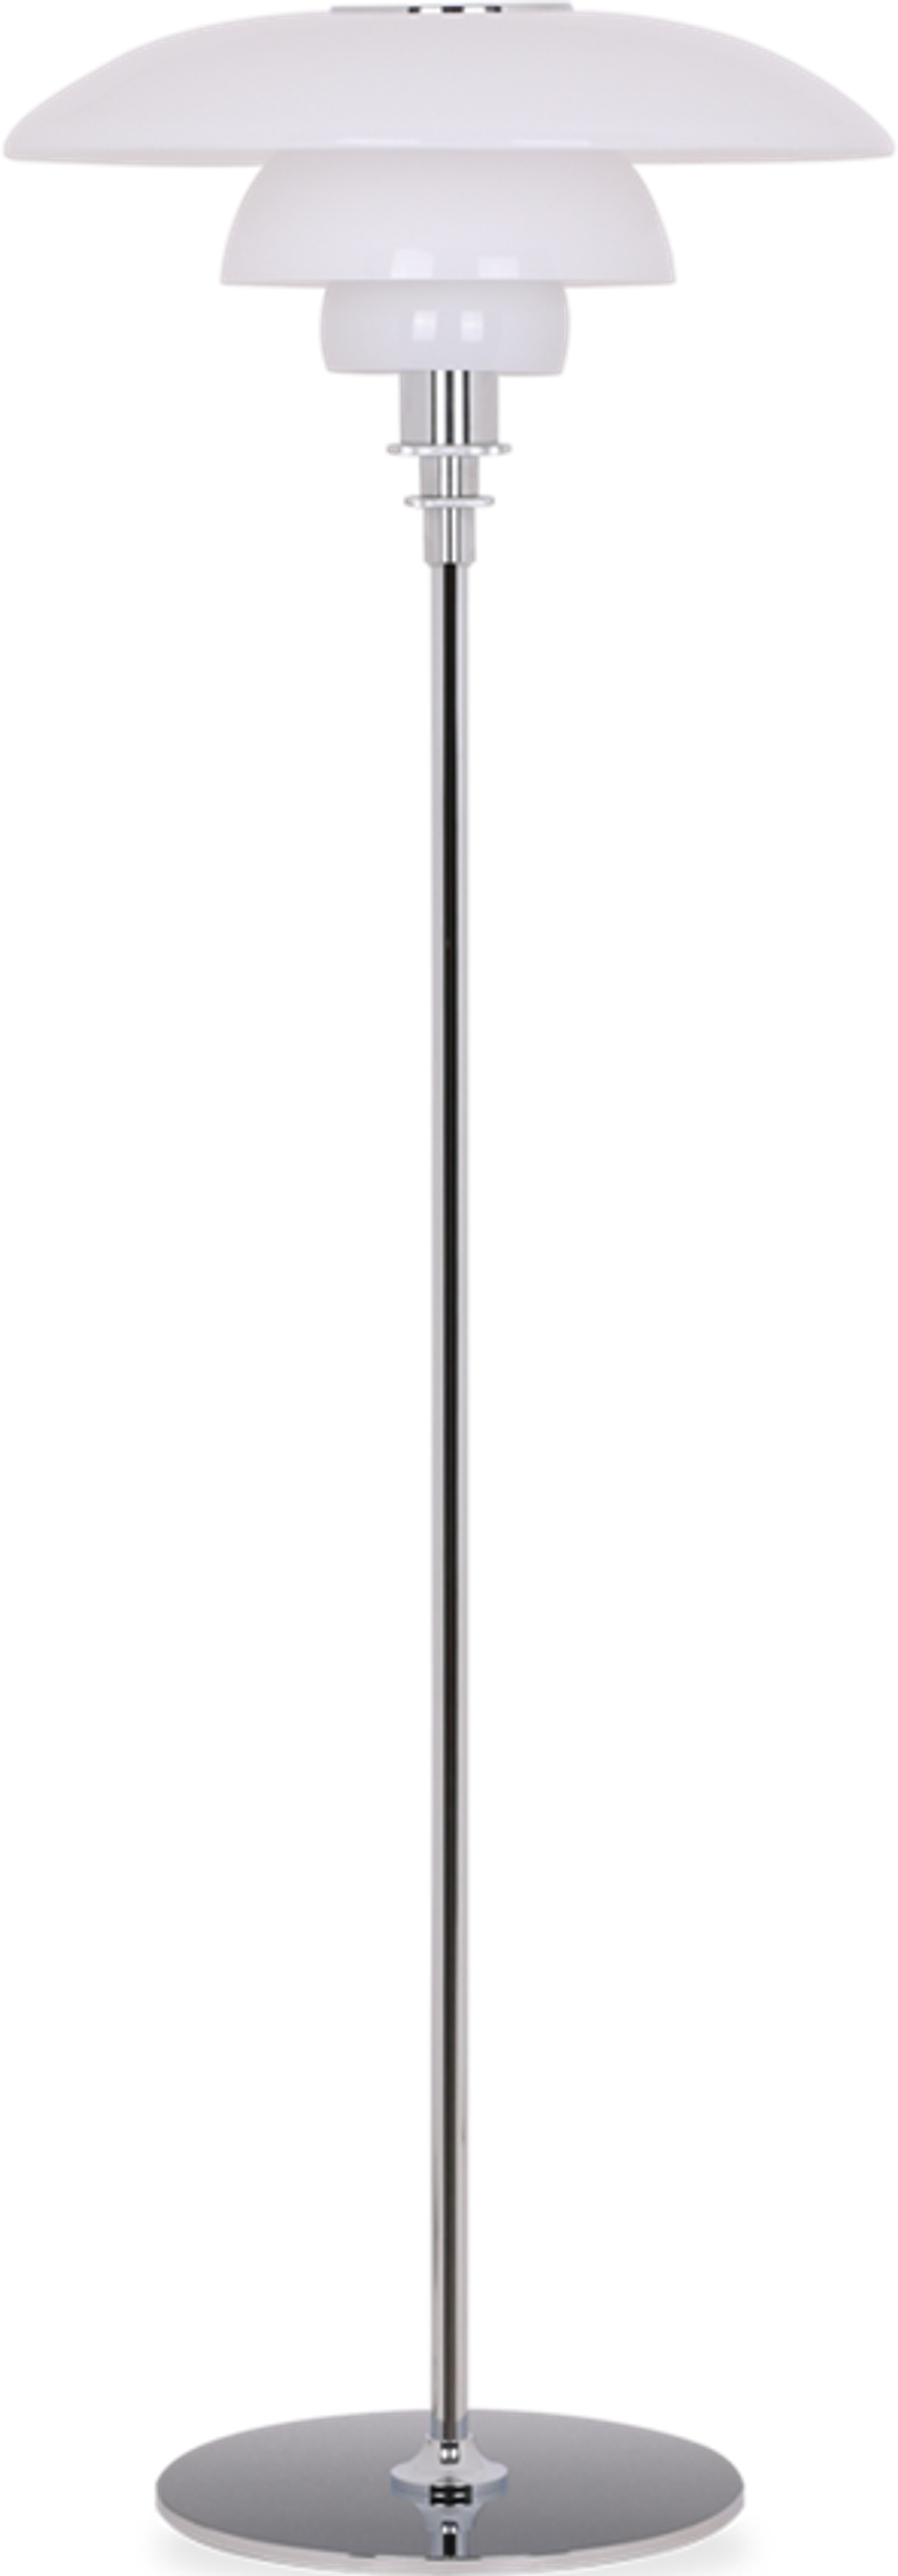 Lampada da terra alta PH 4,5 - 3,5 Style Black image.